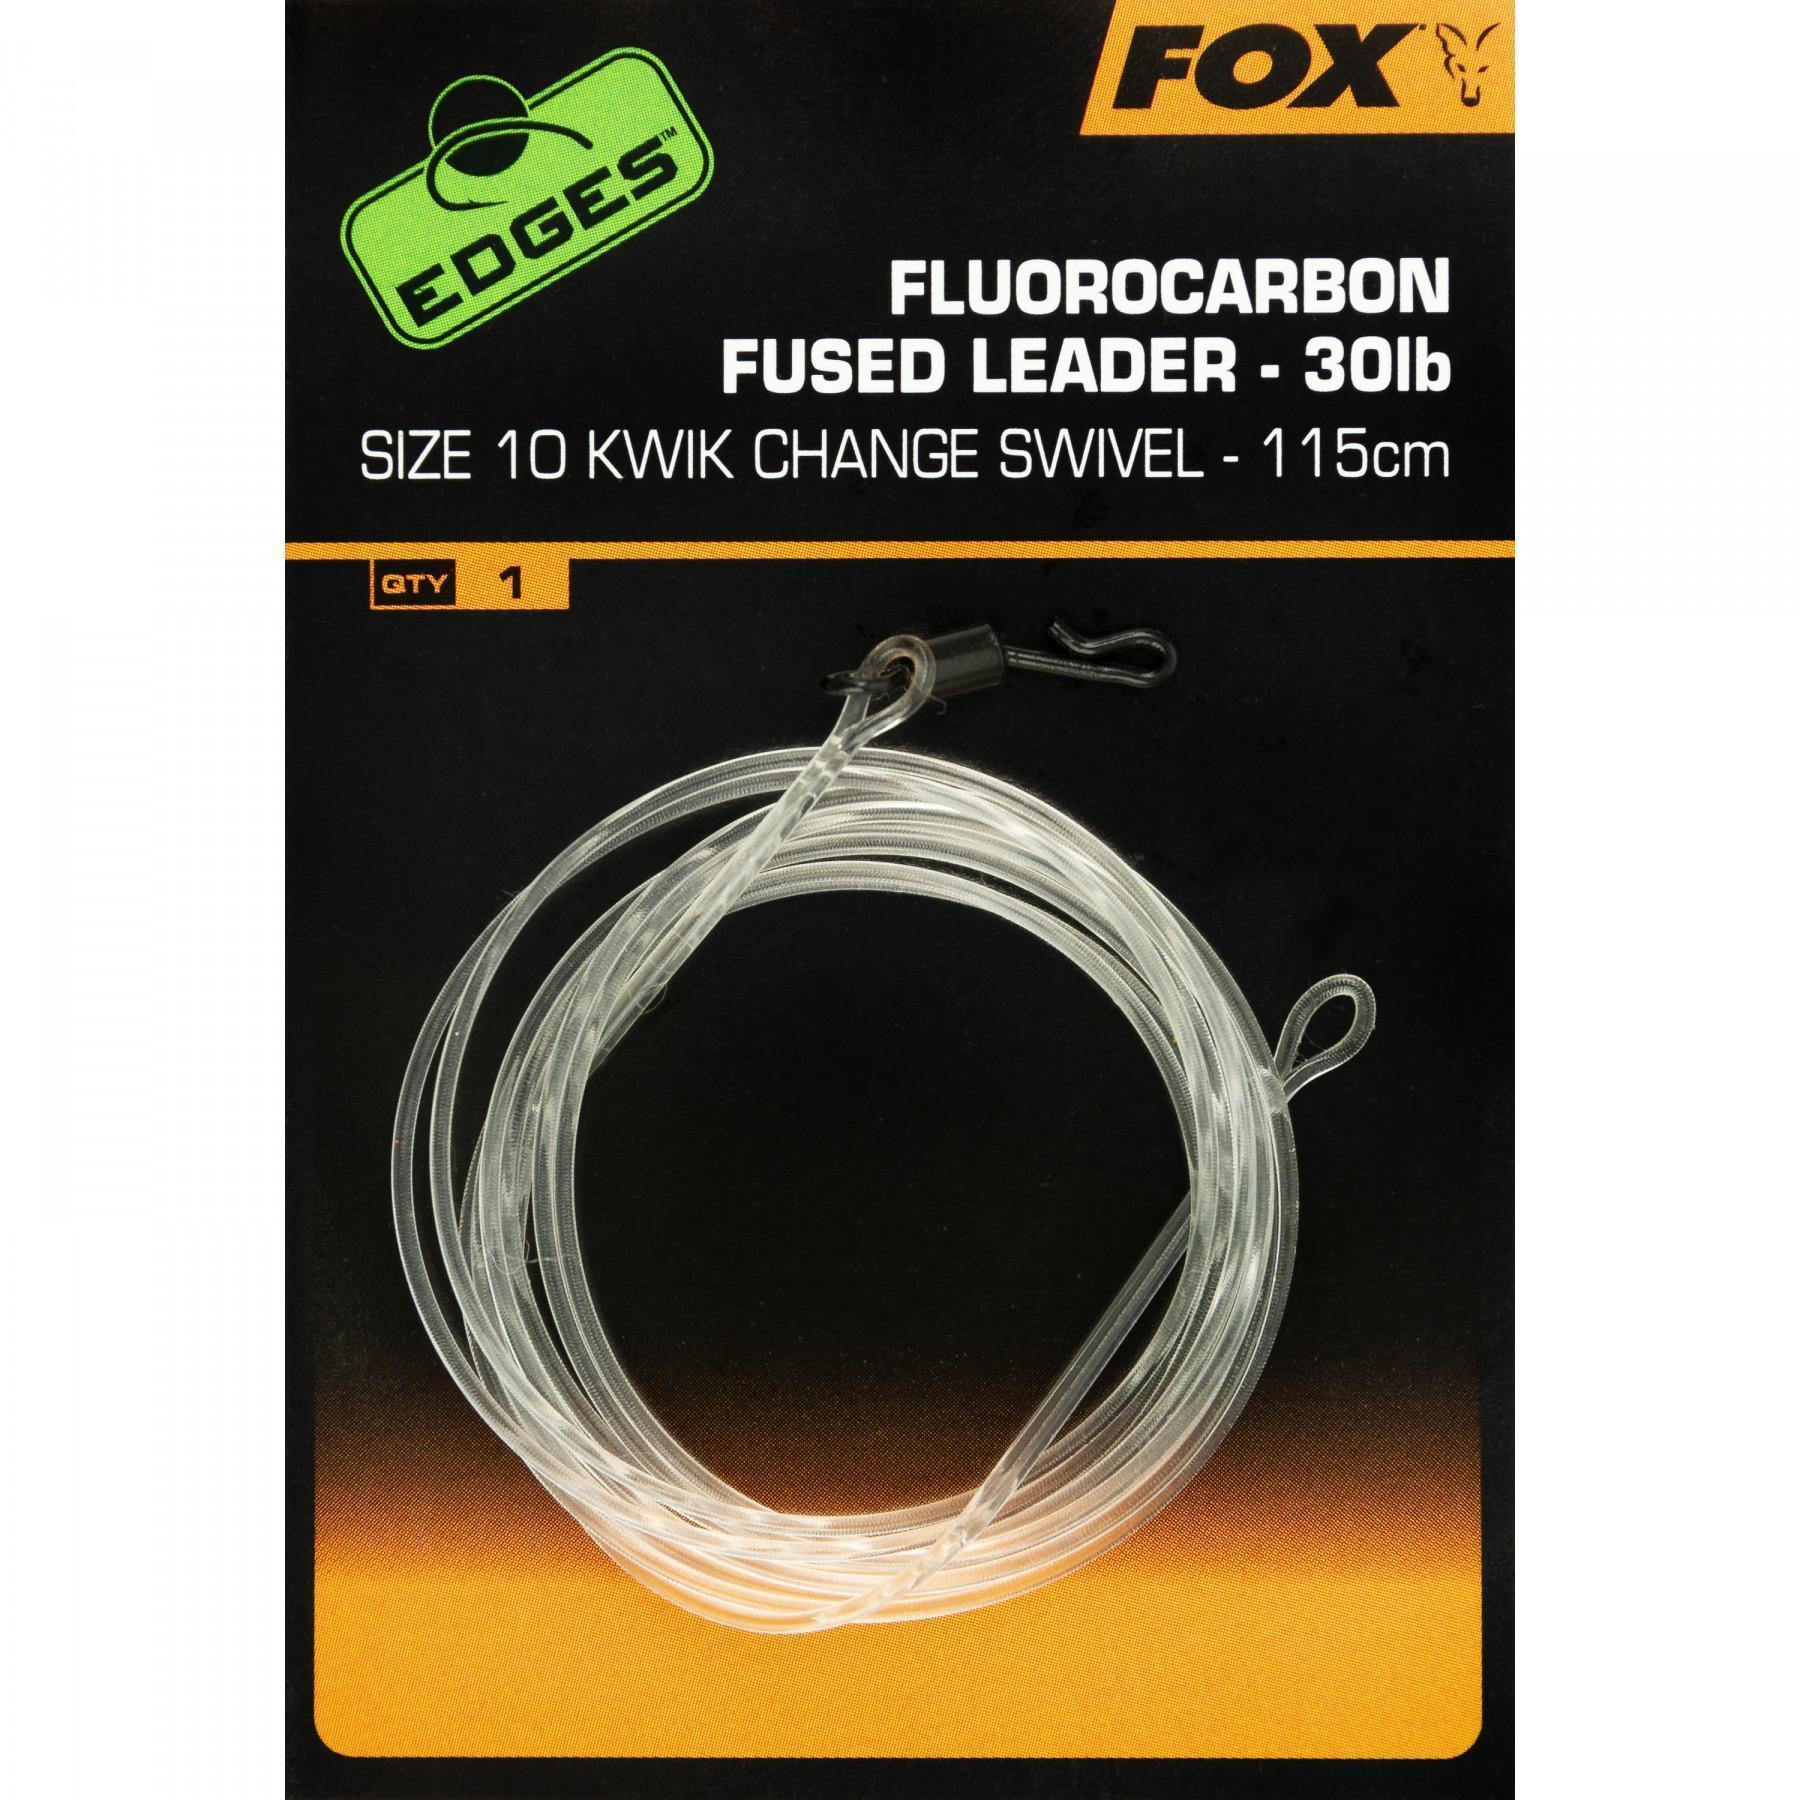 Fluorocarbon wire Fox Fused Leaders Kwik Change Edges taille 10